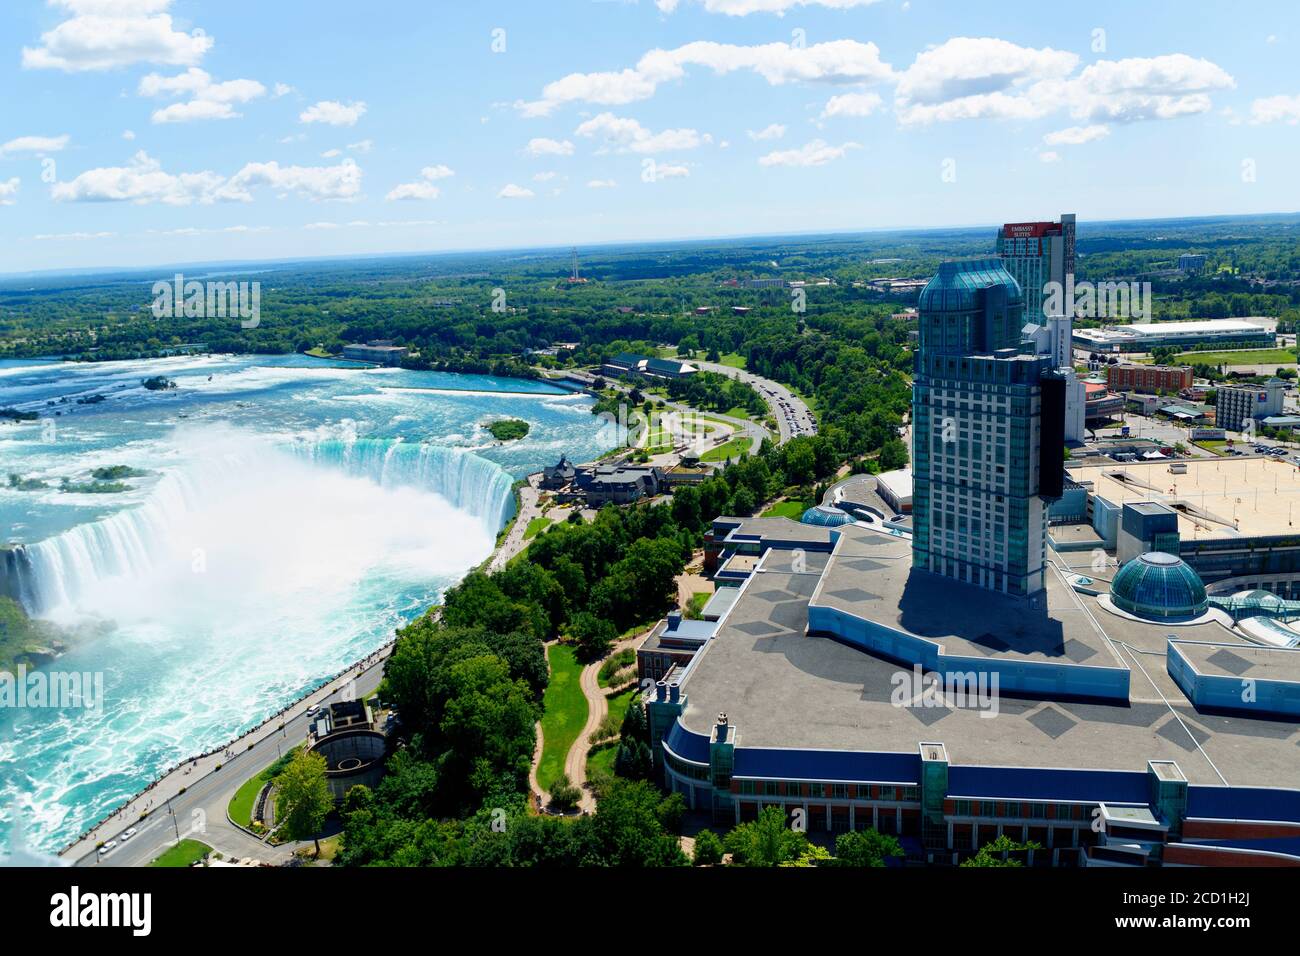 Vue Aérienne Des Chutes Canadiennes, Niagara Falls Ontario Canada. Banque D'Images